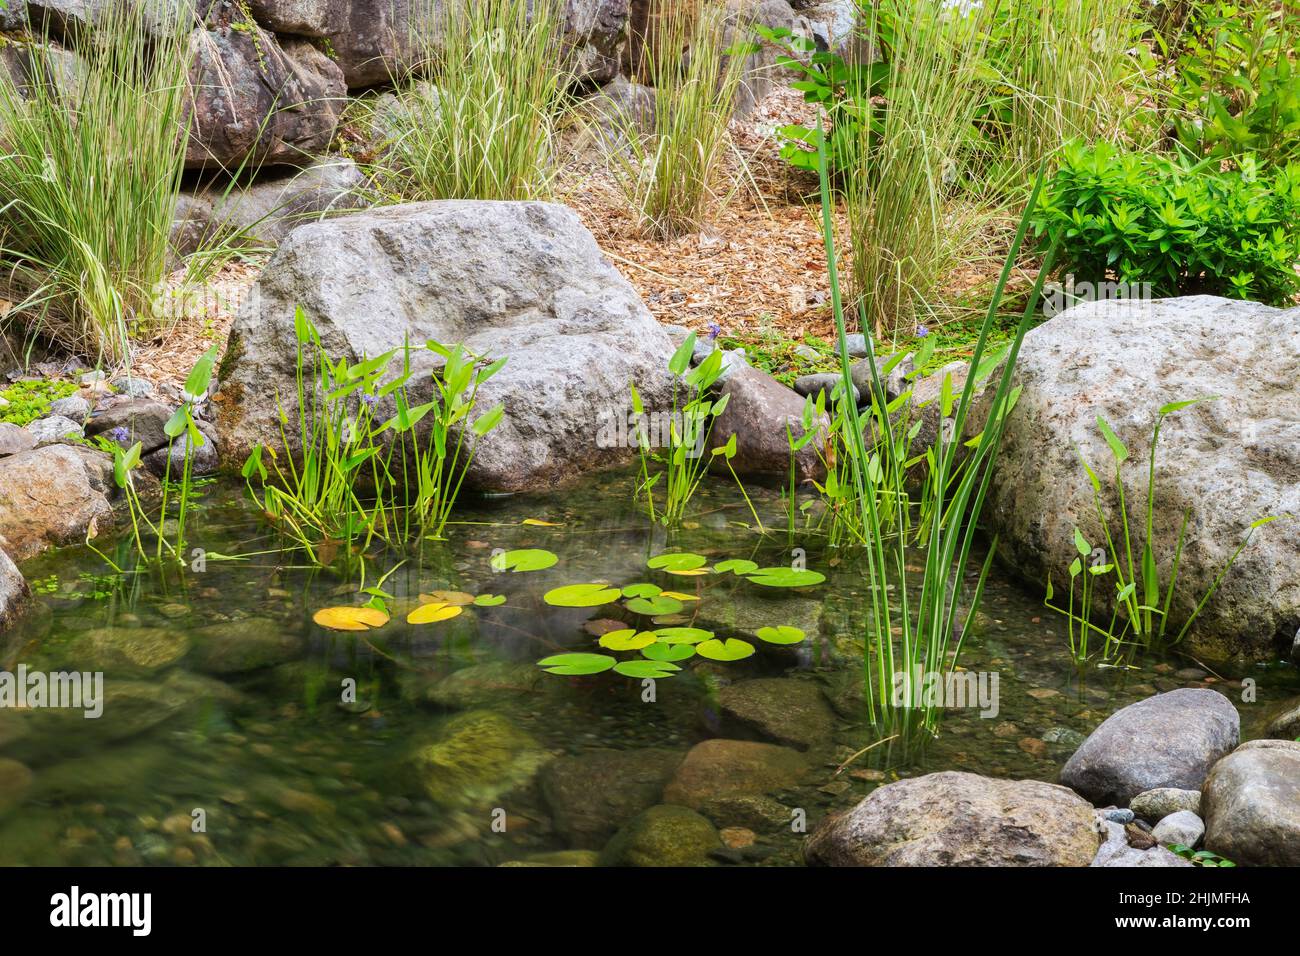 Pond with Acorus calamus ‘variegatus' - Variegated Sweet Flag, Pontederia cordata - Pickerel Weed, Nymphaea - Waterlilies in front yard garden. Stock Photo